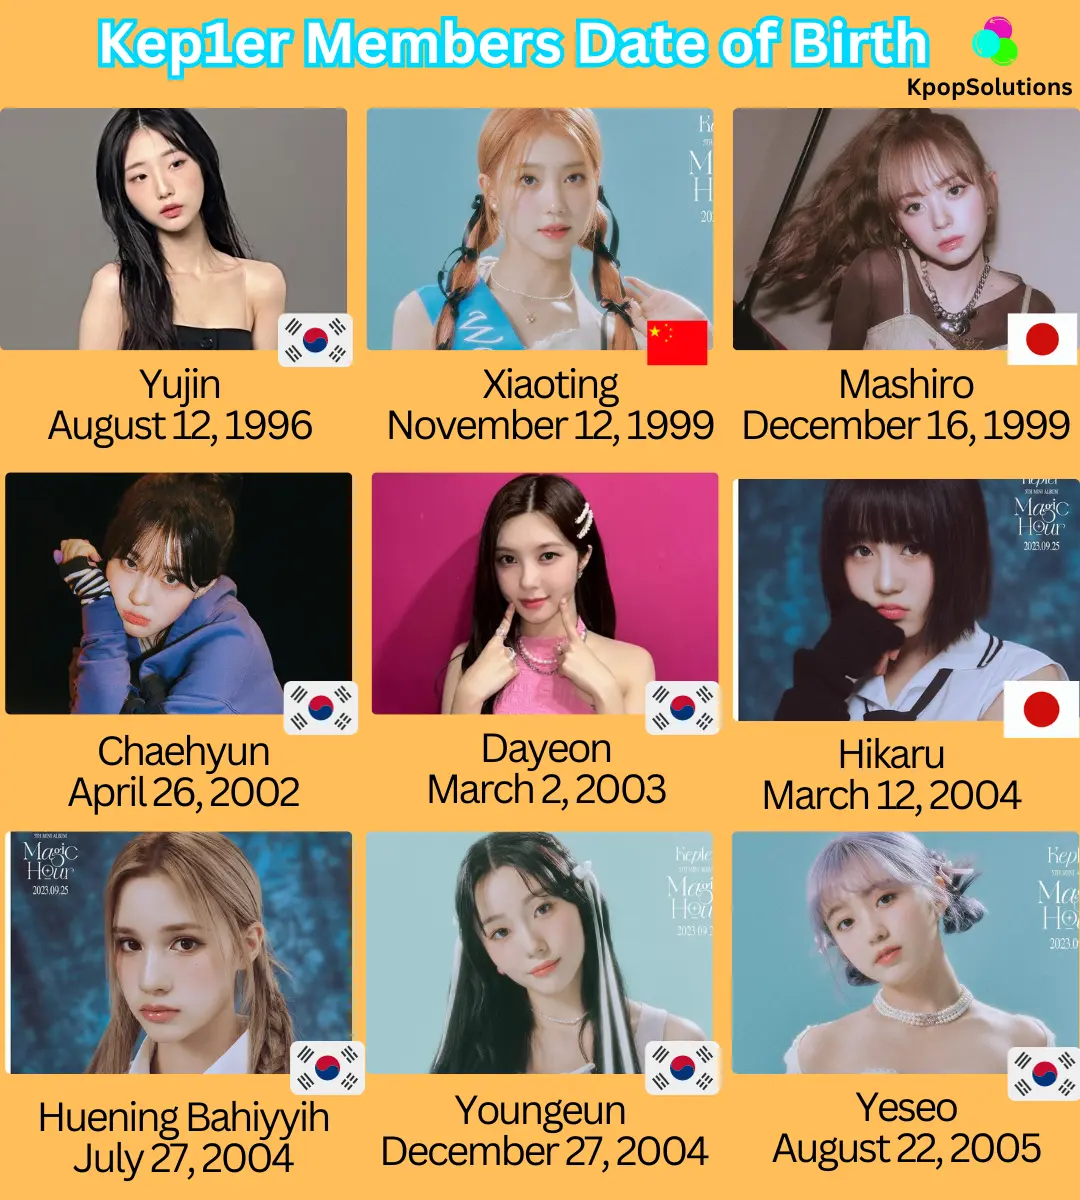 Kep1er members date of birth and current ages: Yujin, Xiaoting, Mashiro, Chaehyun, Dayeon, Hikaru, Huening Bahiyyih, Youngeun, and Yeseo.